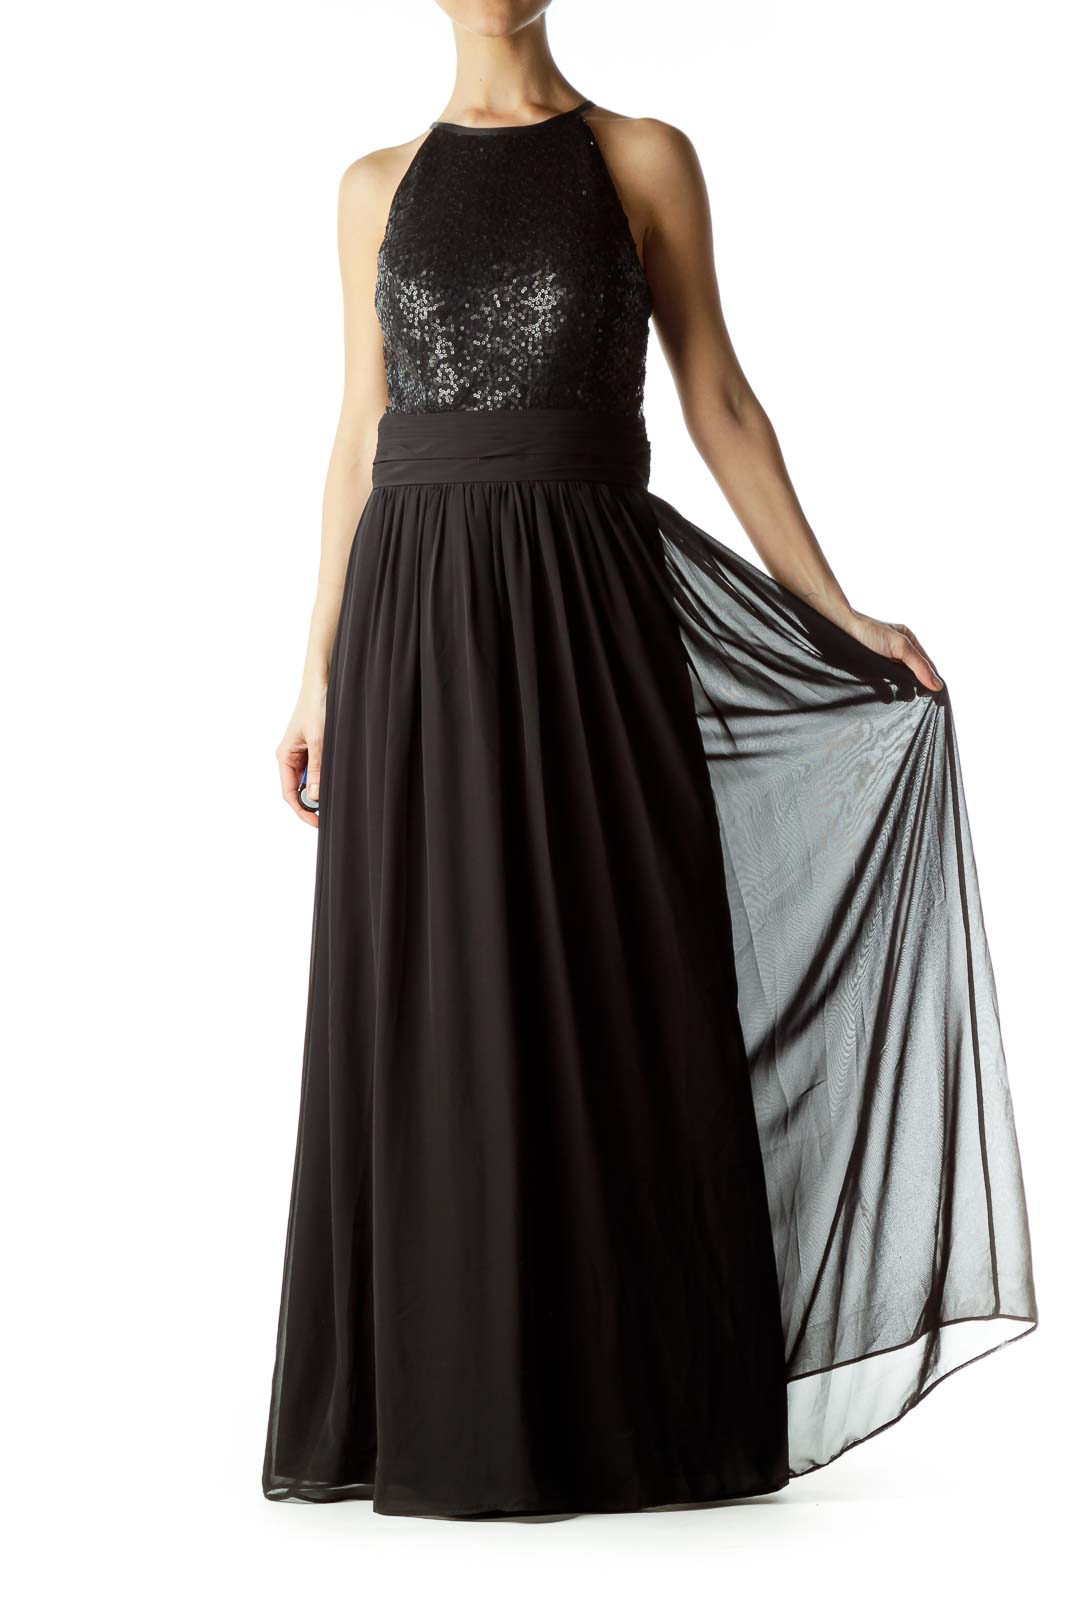 Black Sequin Detailed Evening Dress Front